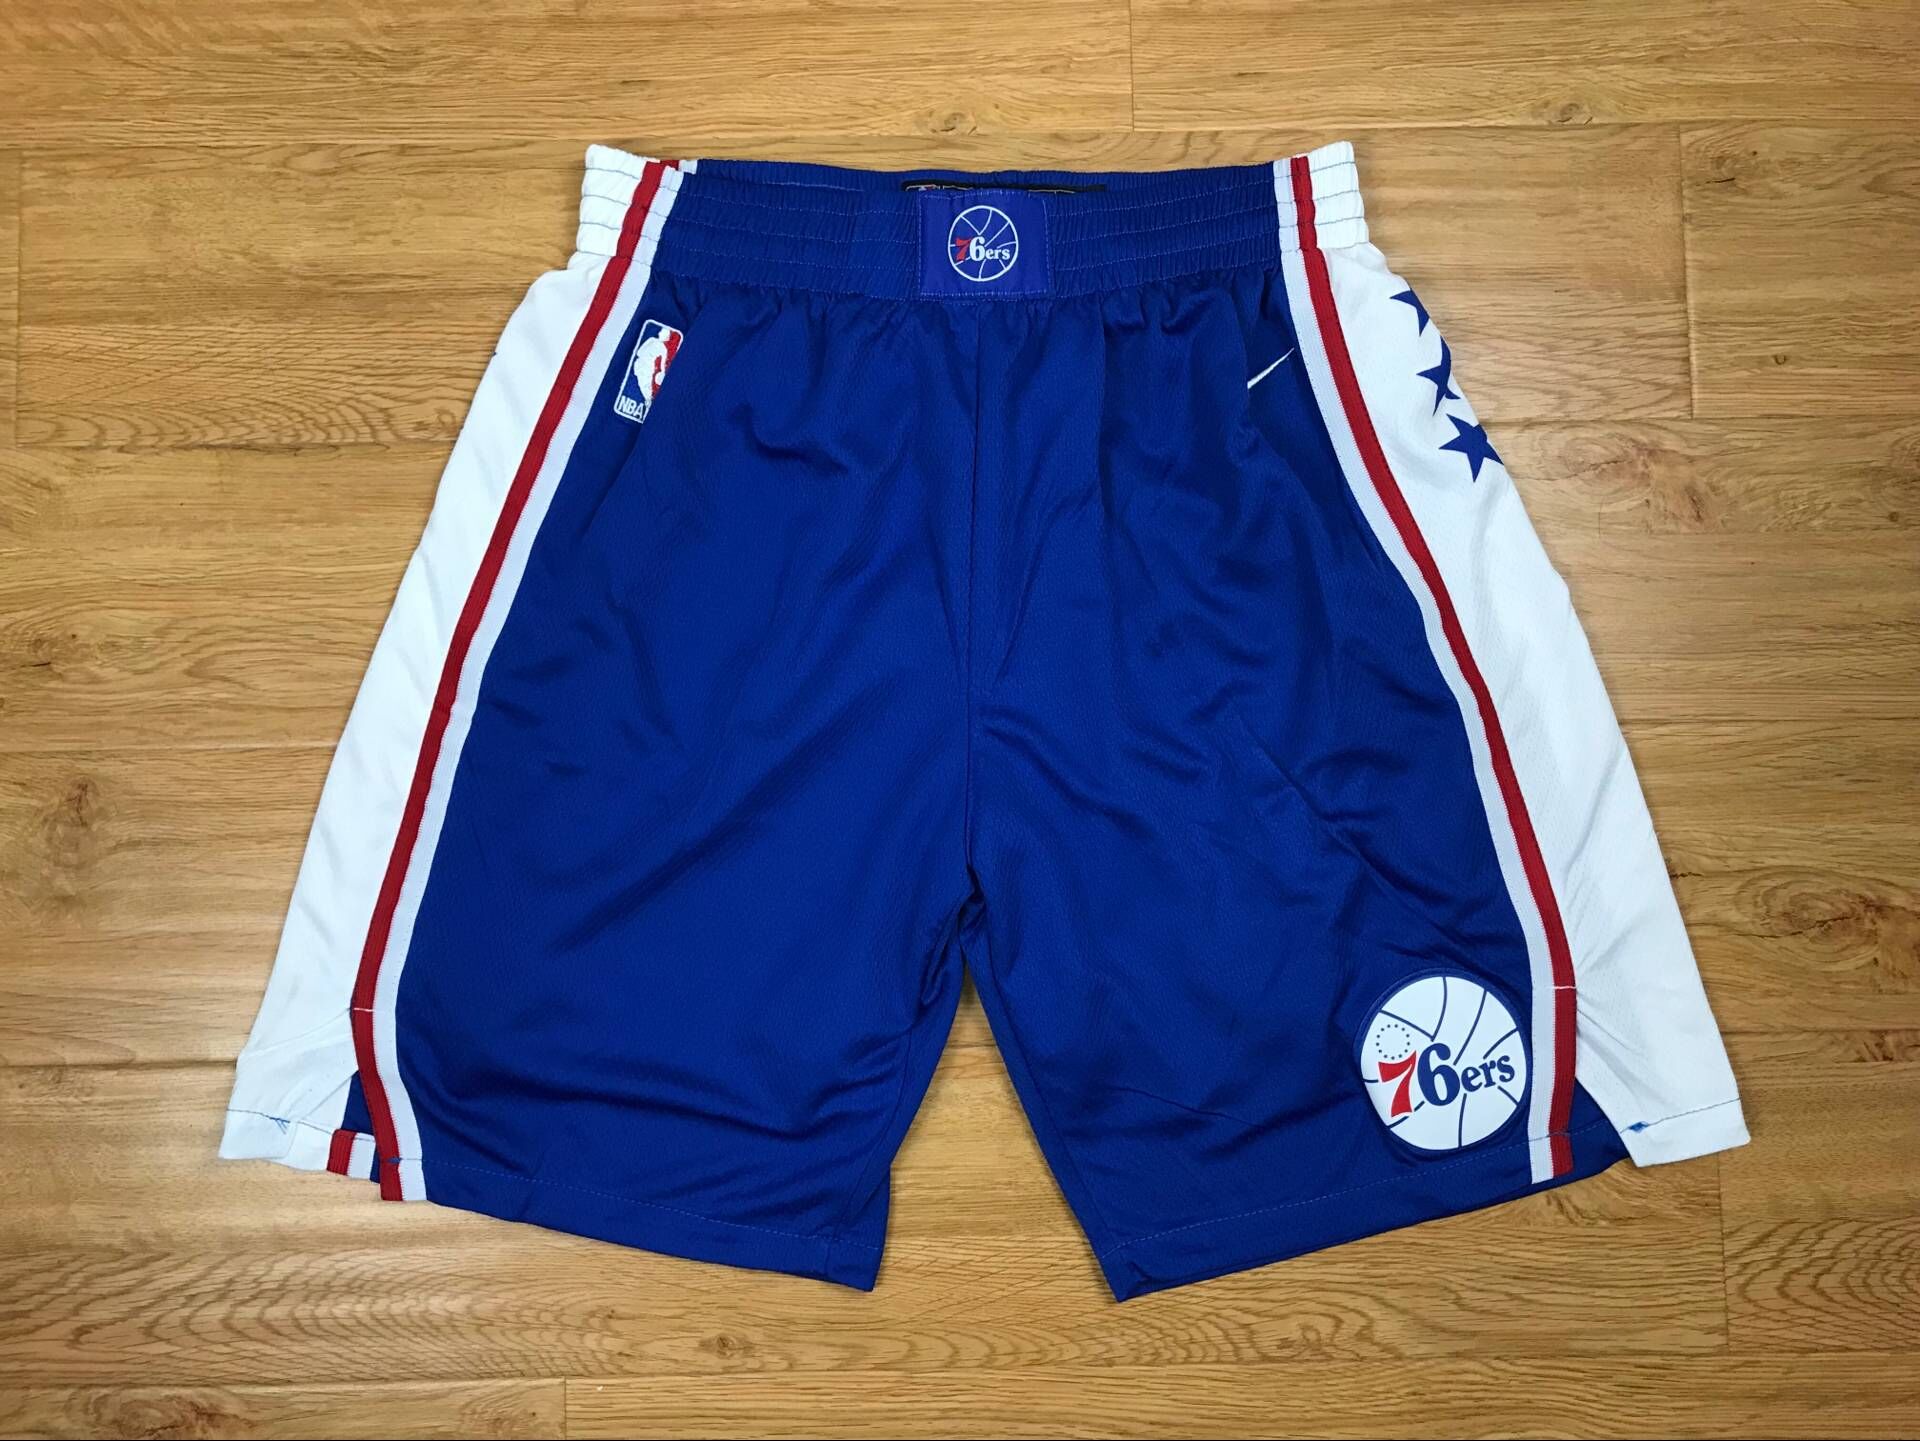 76ers Blue Nike Authentic Shorts